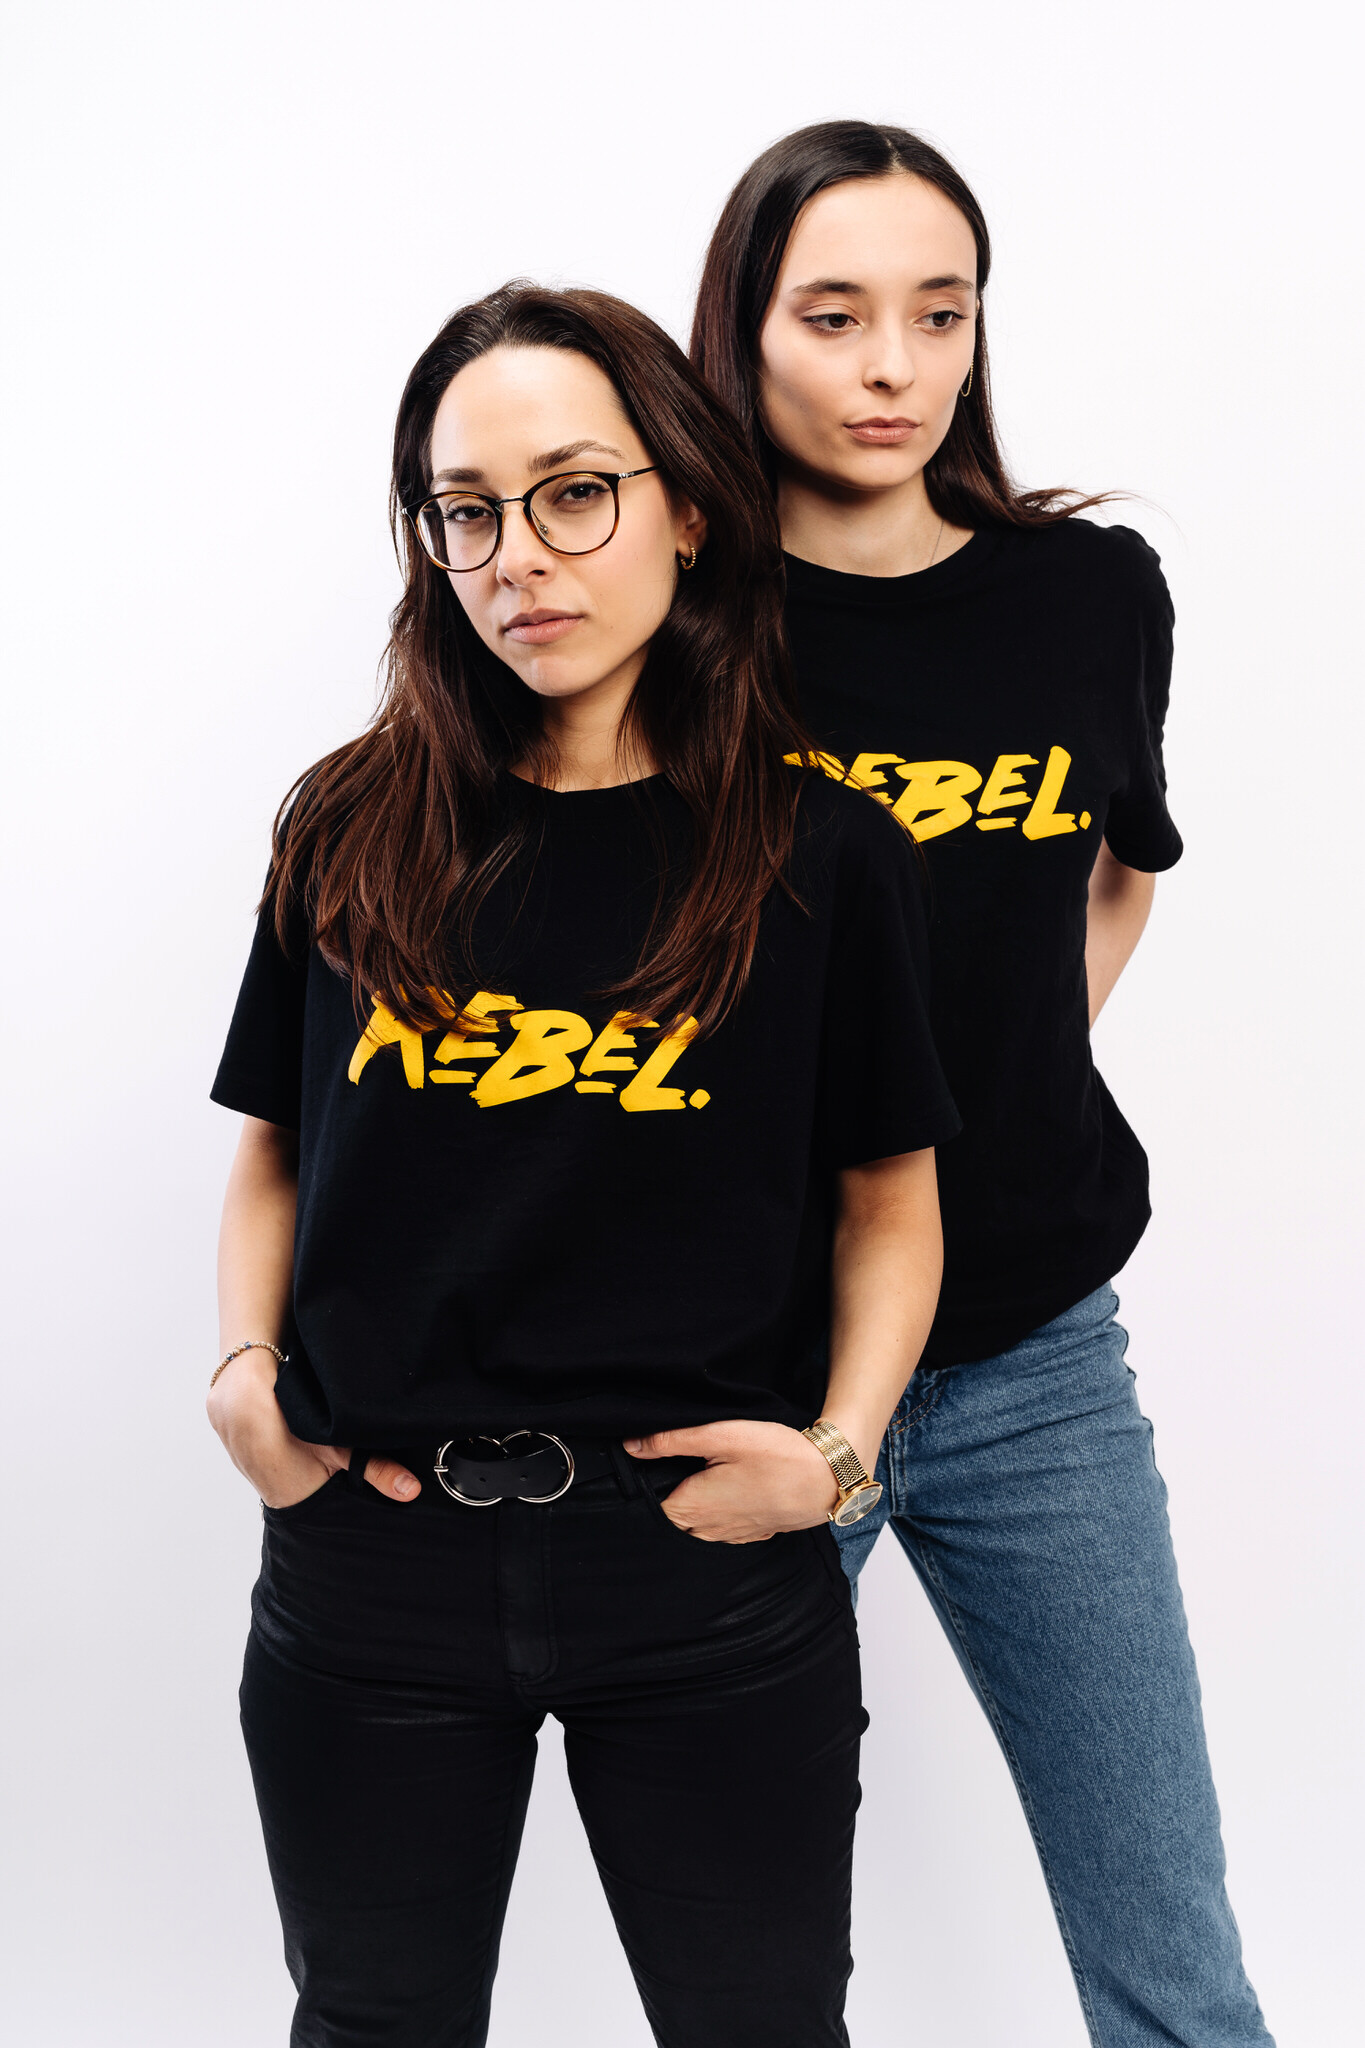 Rebel T-shirt – Store